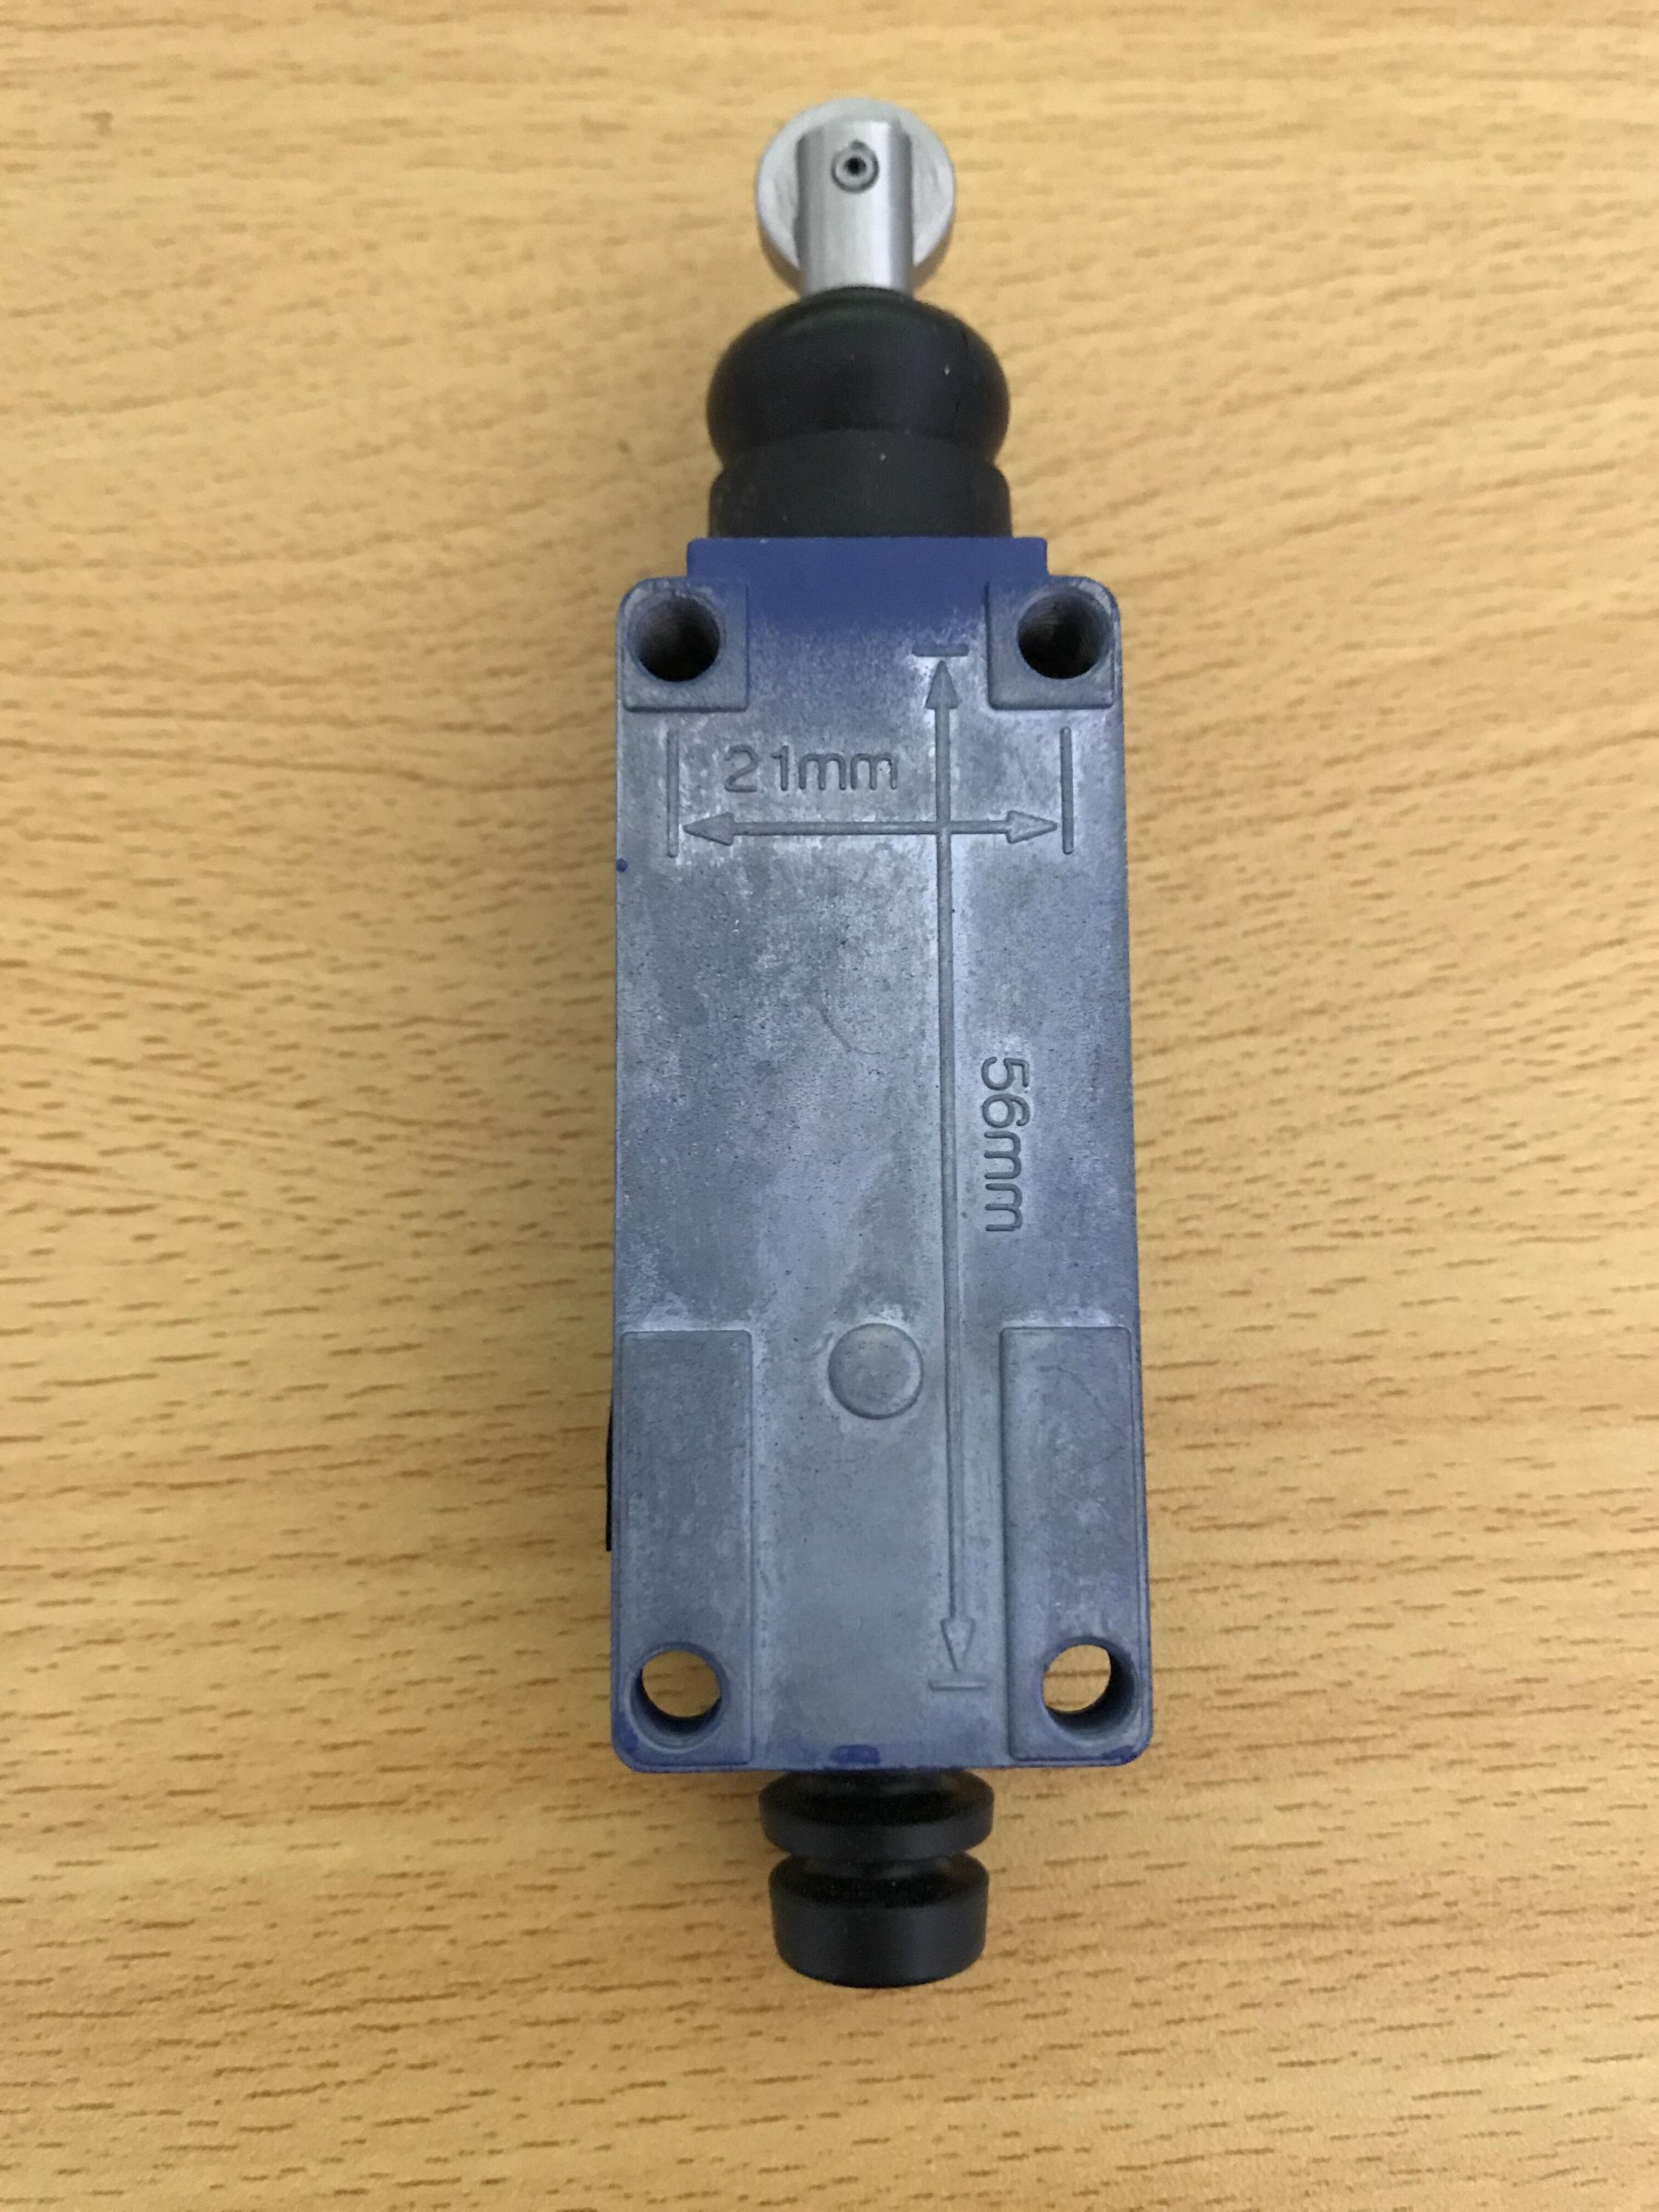 Original New Schneider XCE102 High Quality Limit Switch